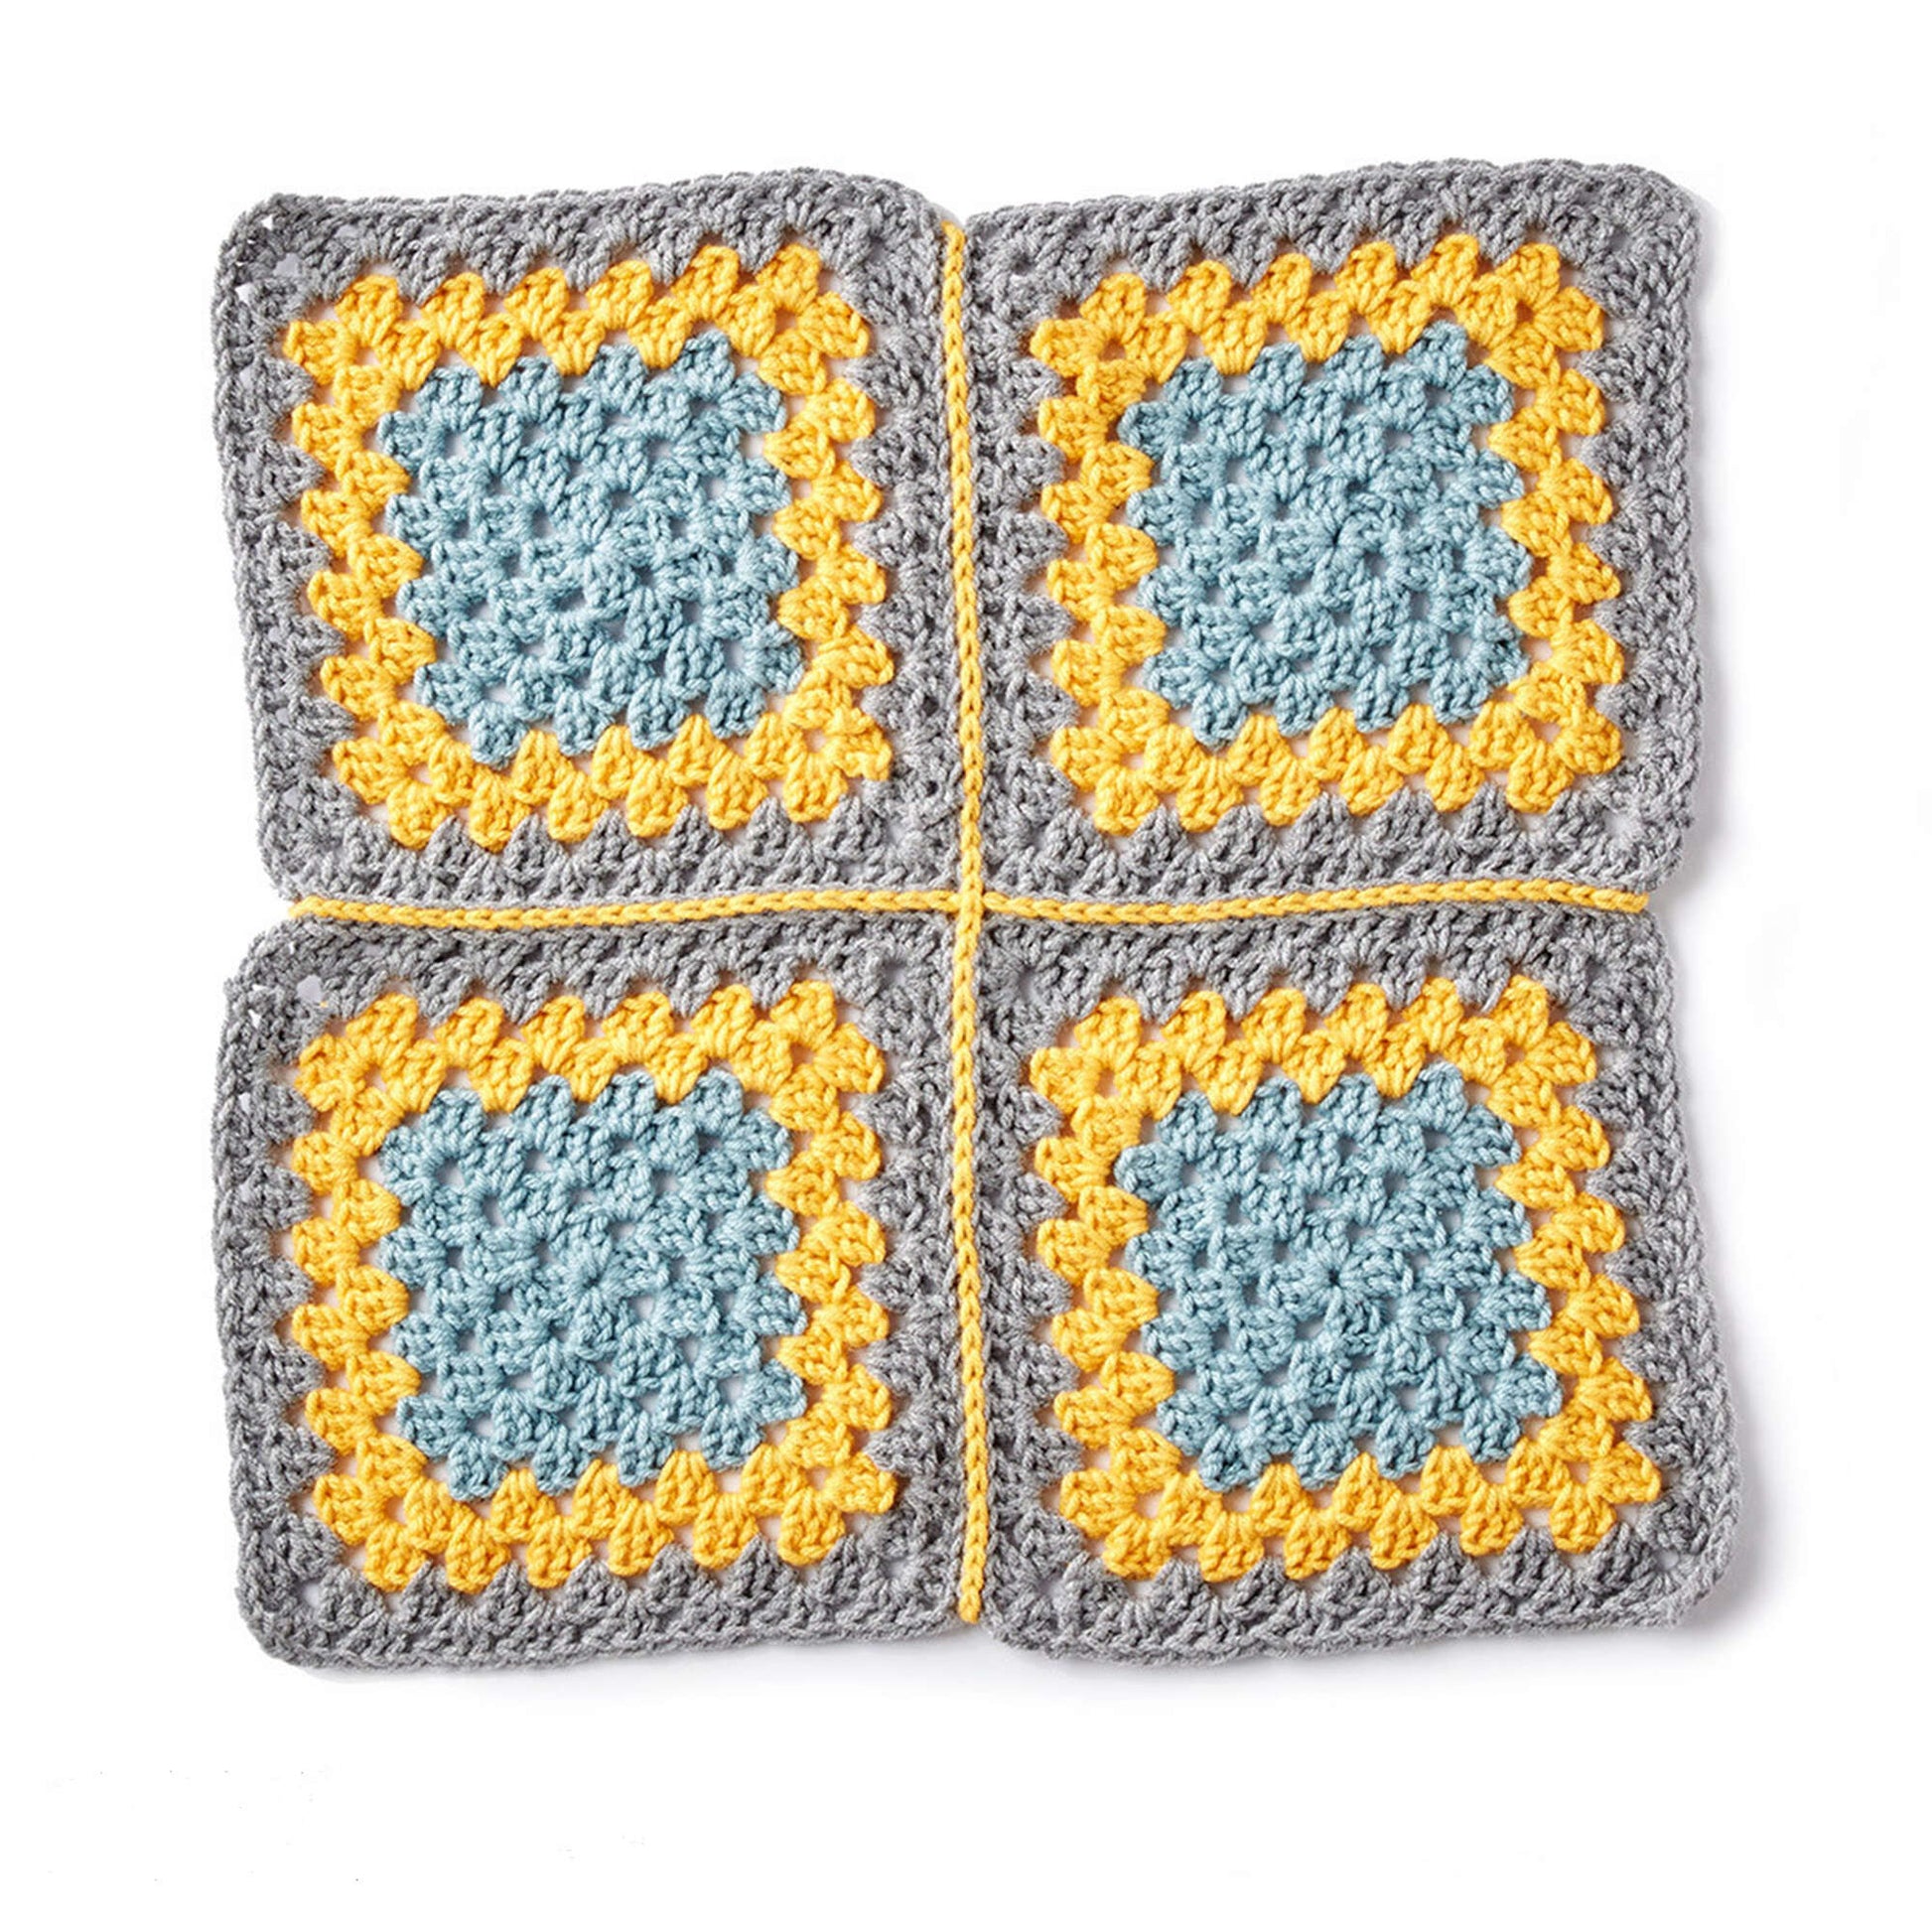 Caron Diamond Crochet Granny Afghan Version 2